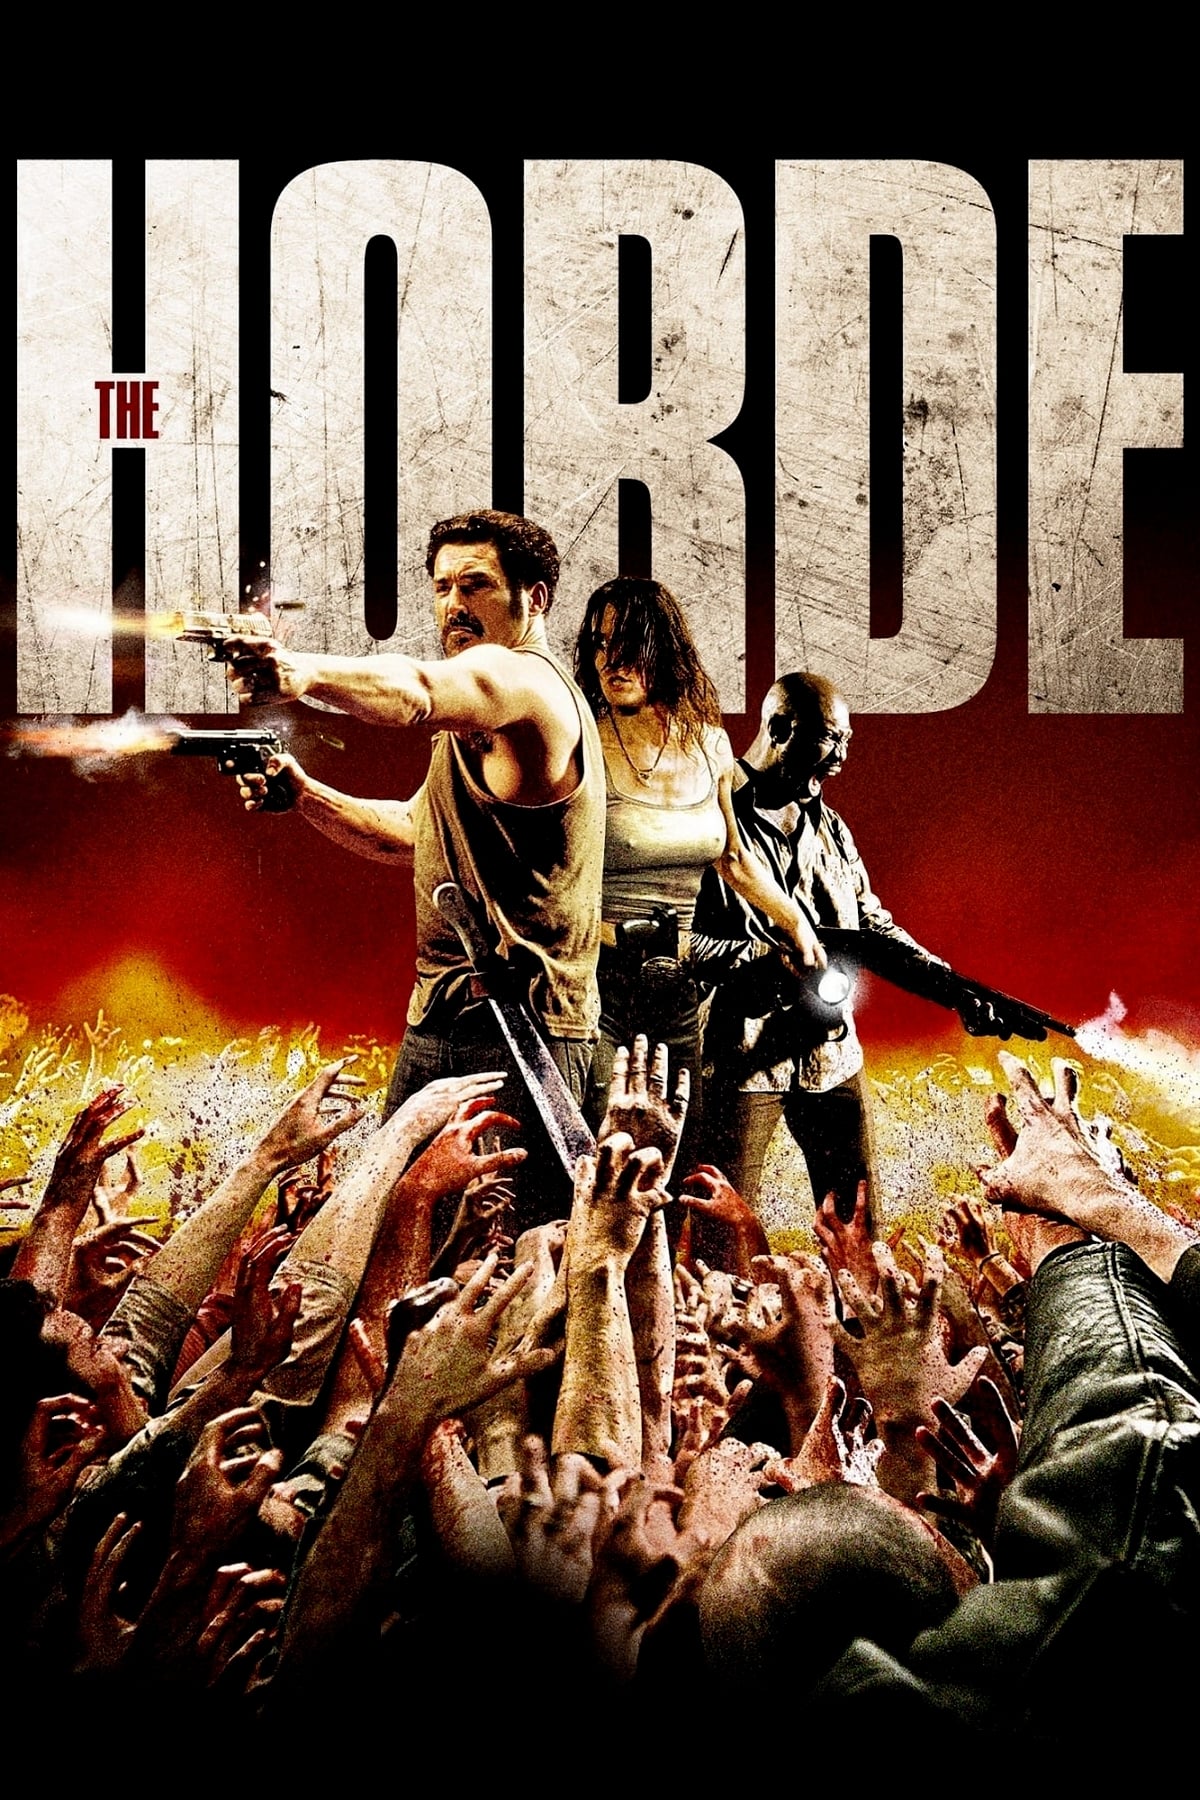 The Horde (2010)